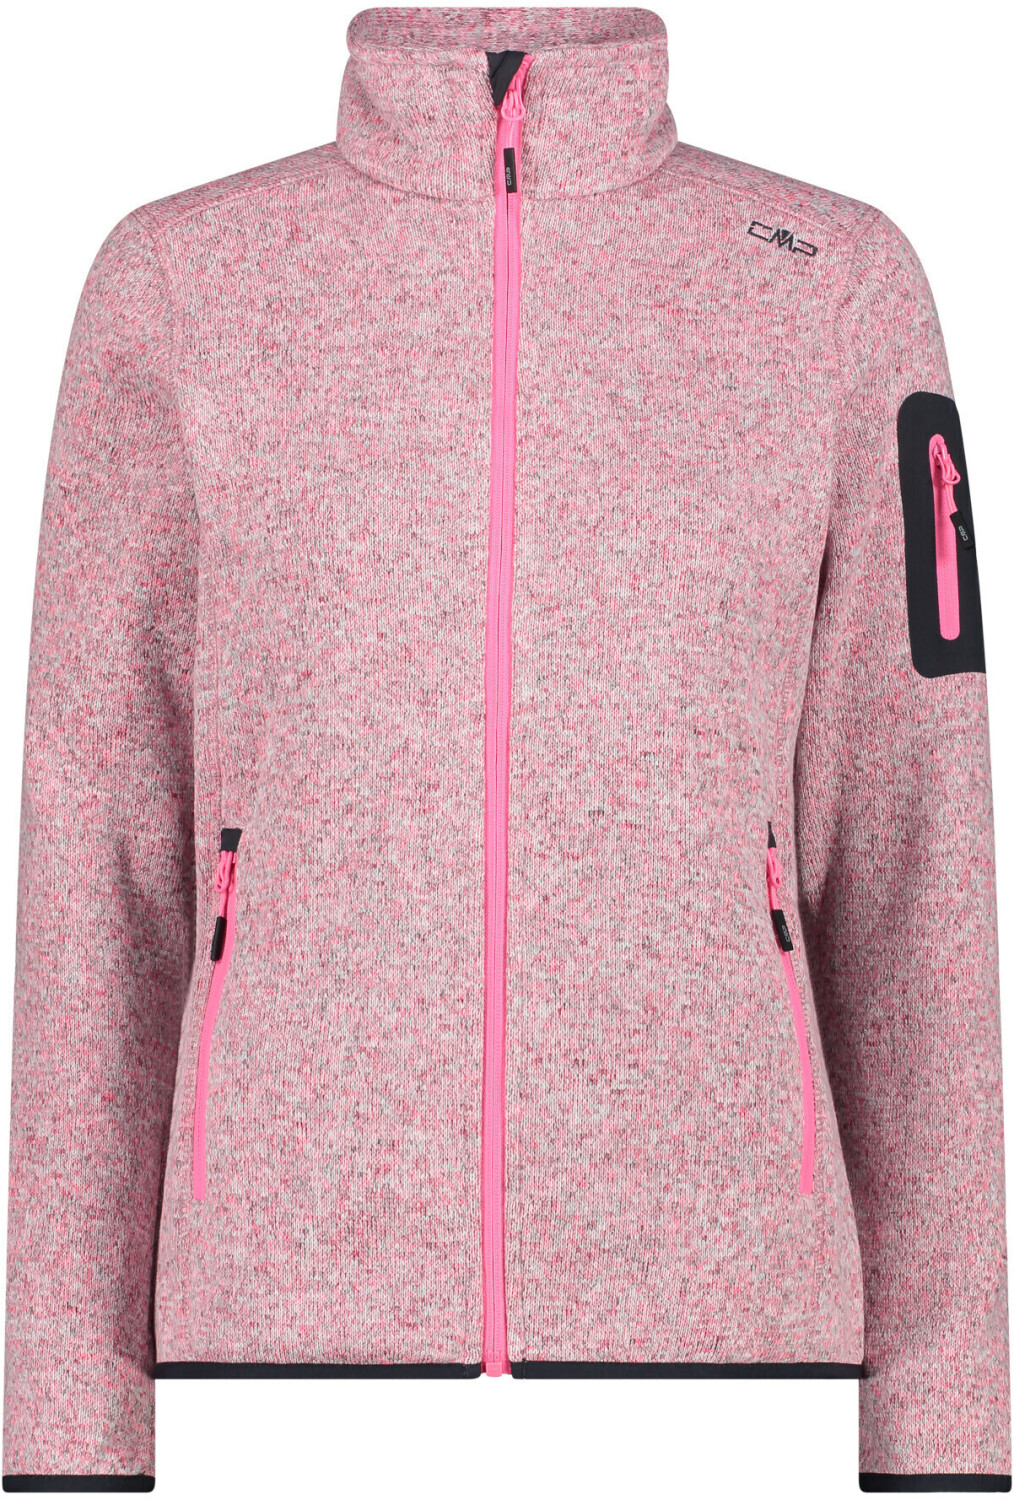 Buy CMP Fleece Jacket Knit-Tech Melange (3H14746) pink fluo-bianco from  £34.99 (Today) – Best Deals on